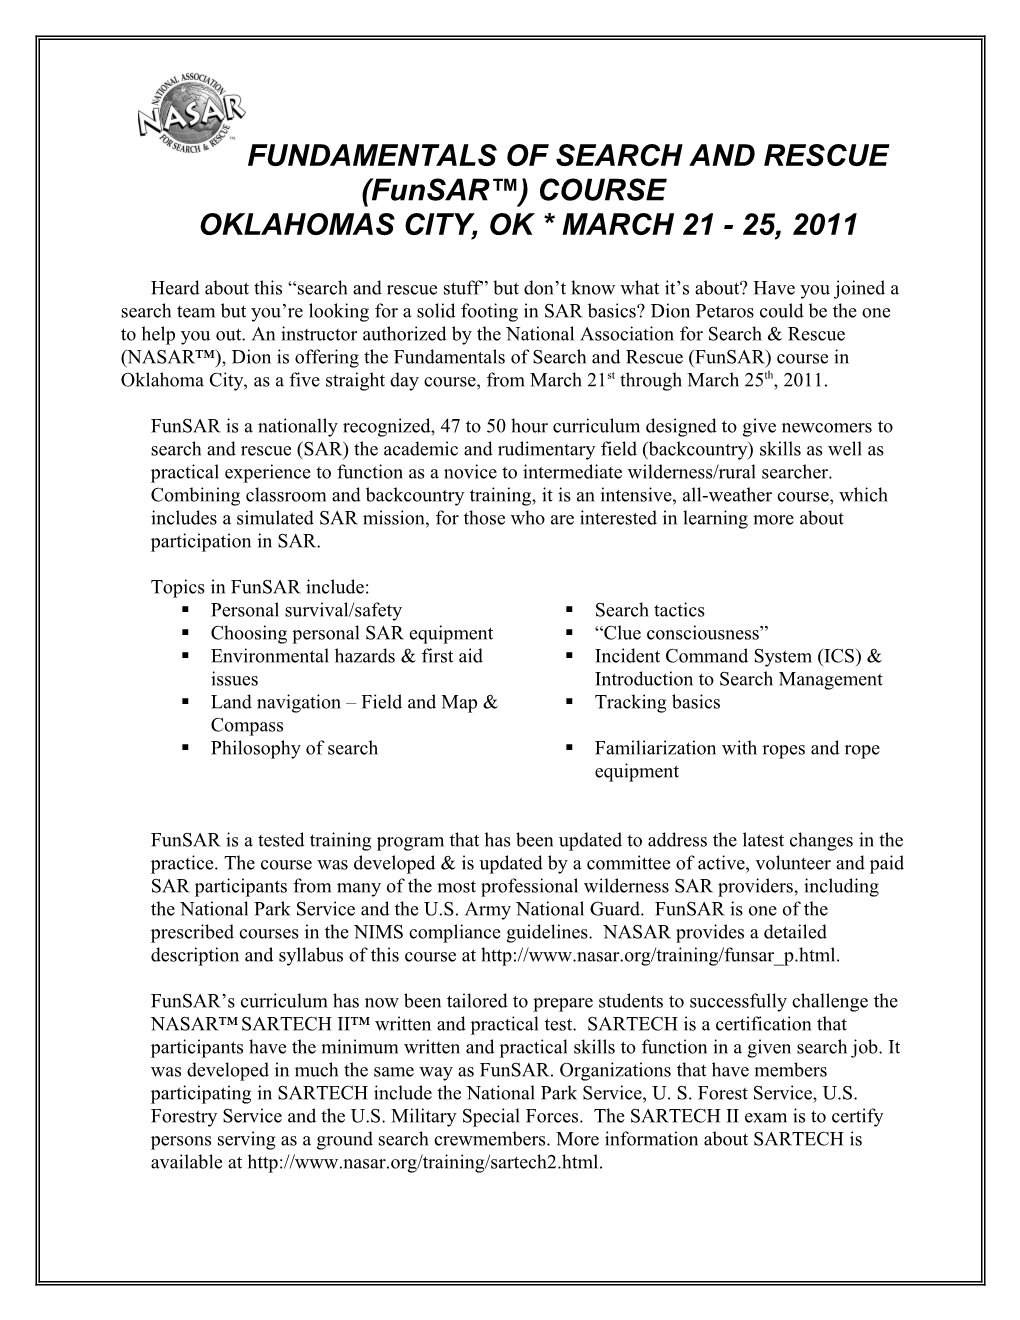 Oklahomas City, OK * MARCH 21 - 25, 2011